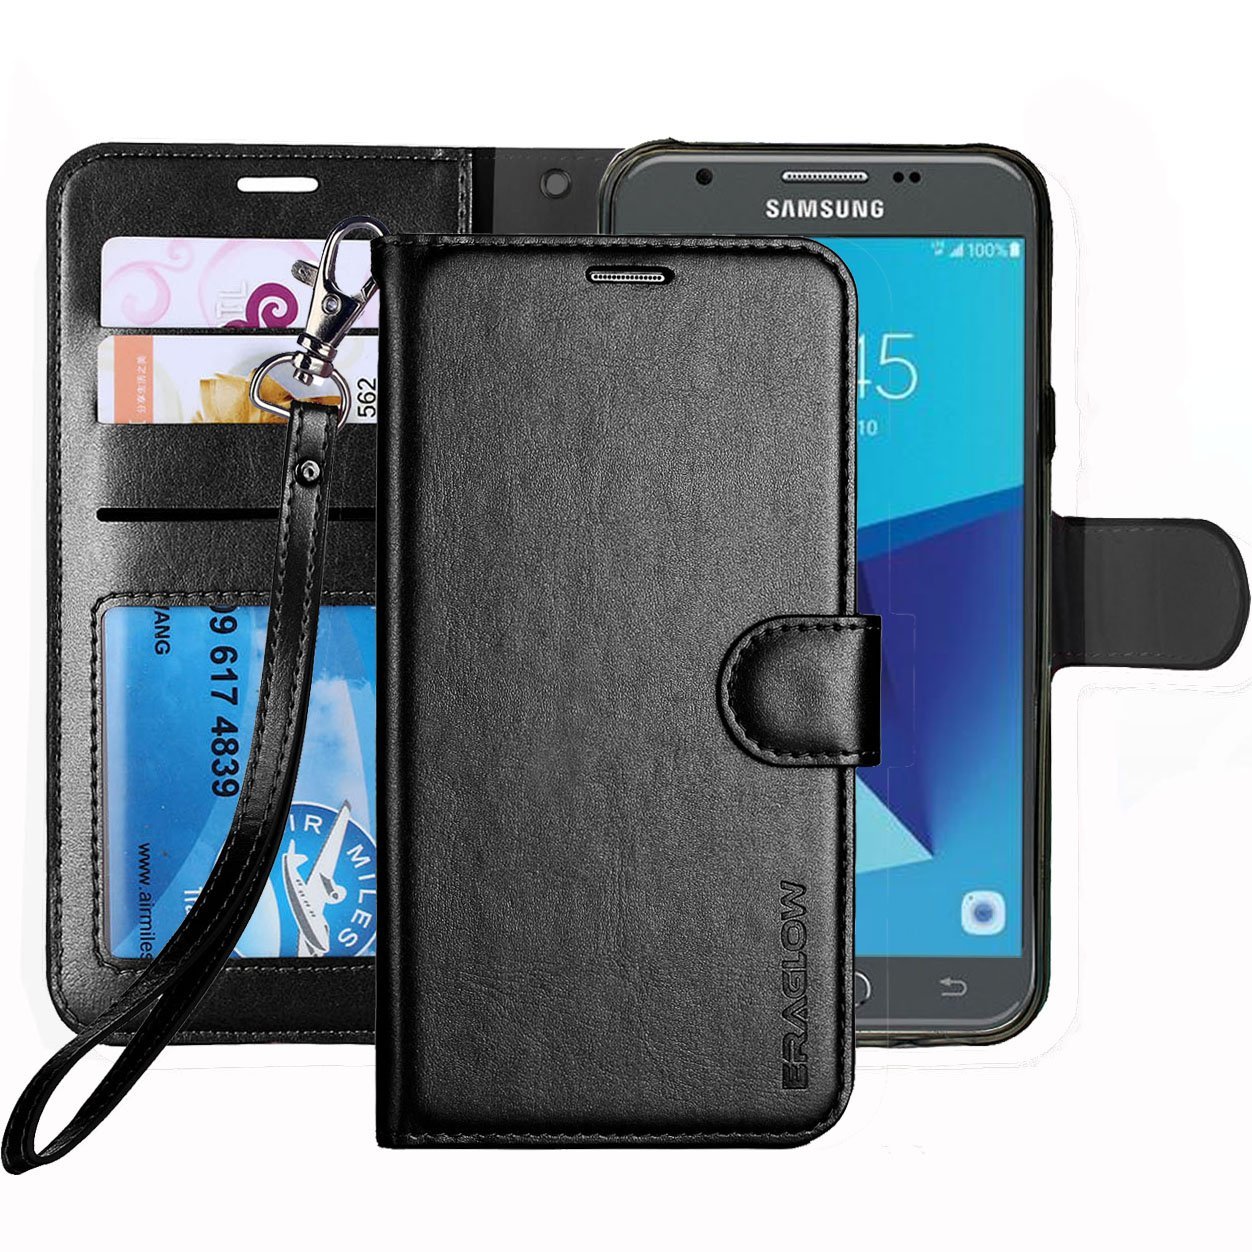 Best Samsung Galaxy J7 Prime cases